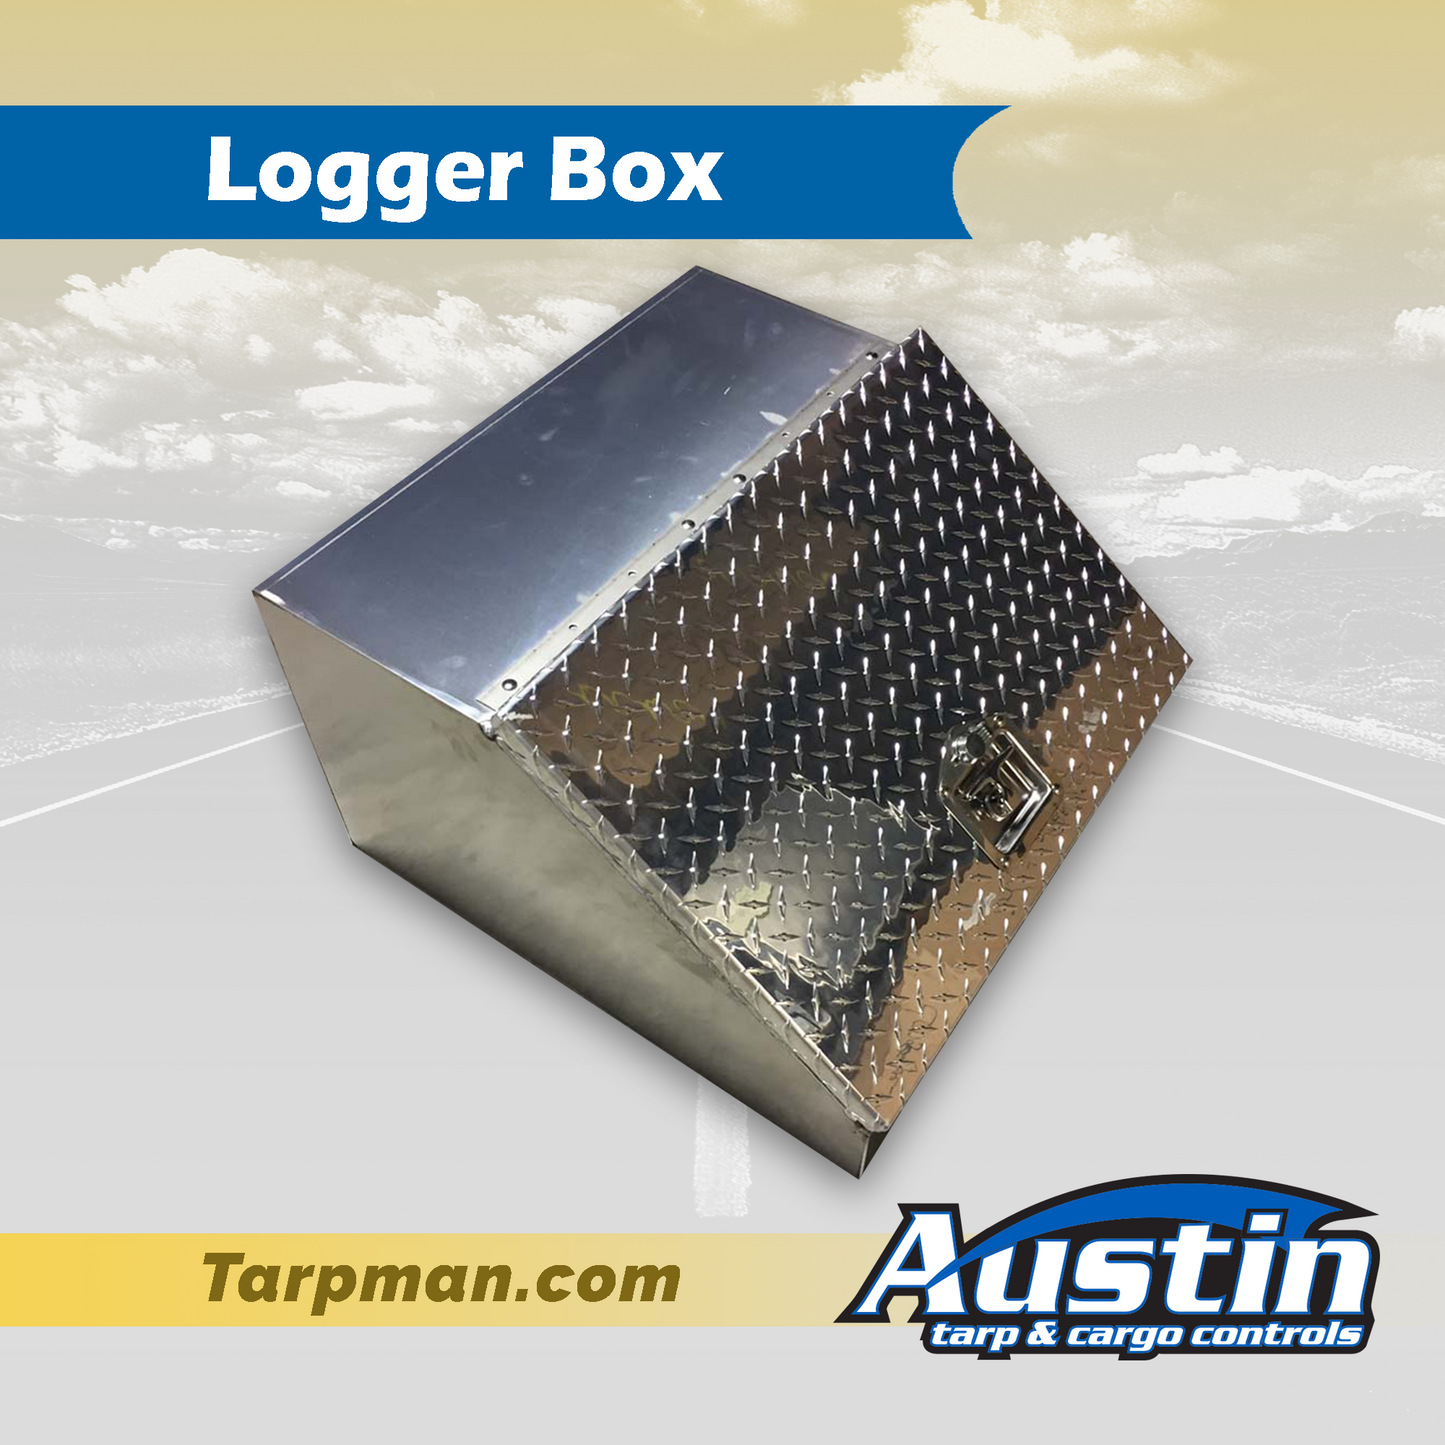 Logger Box